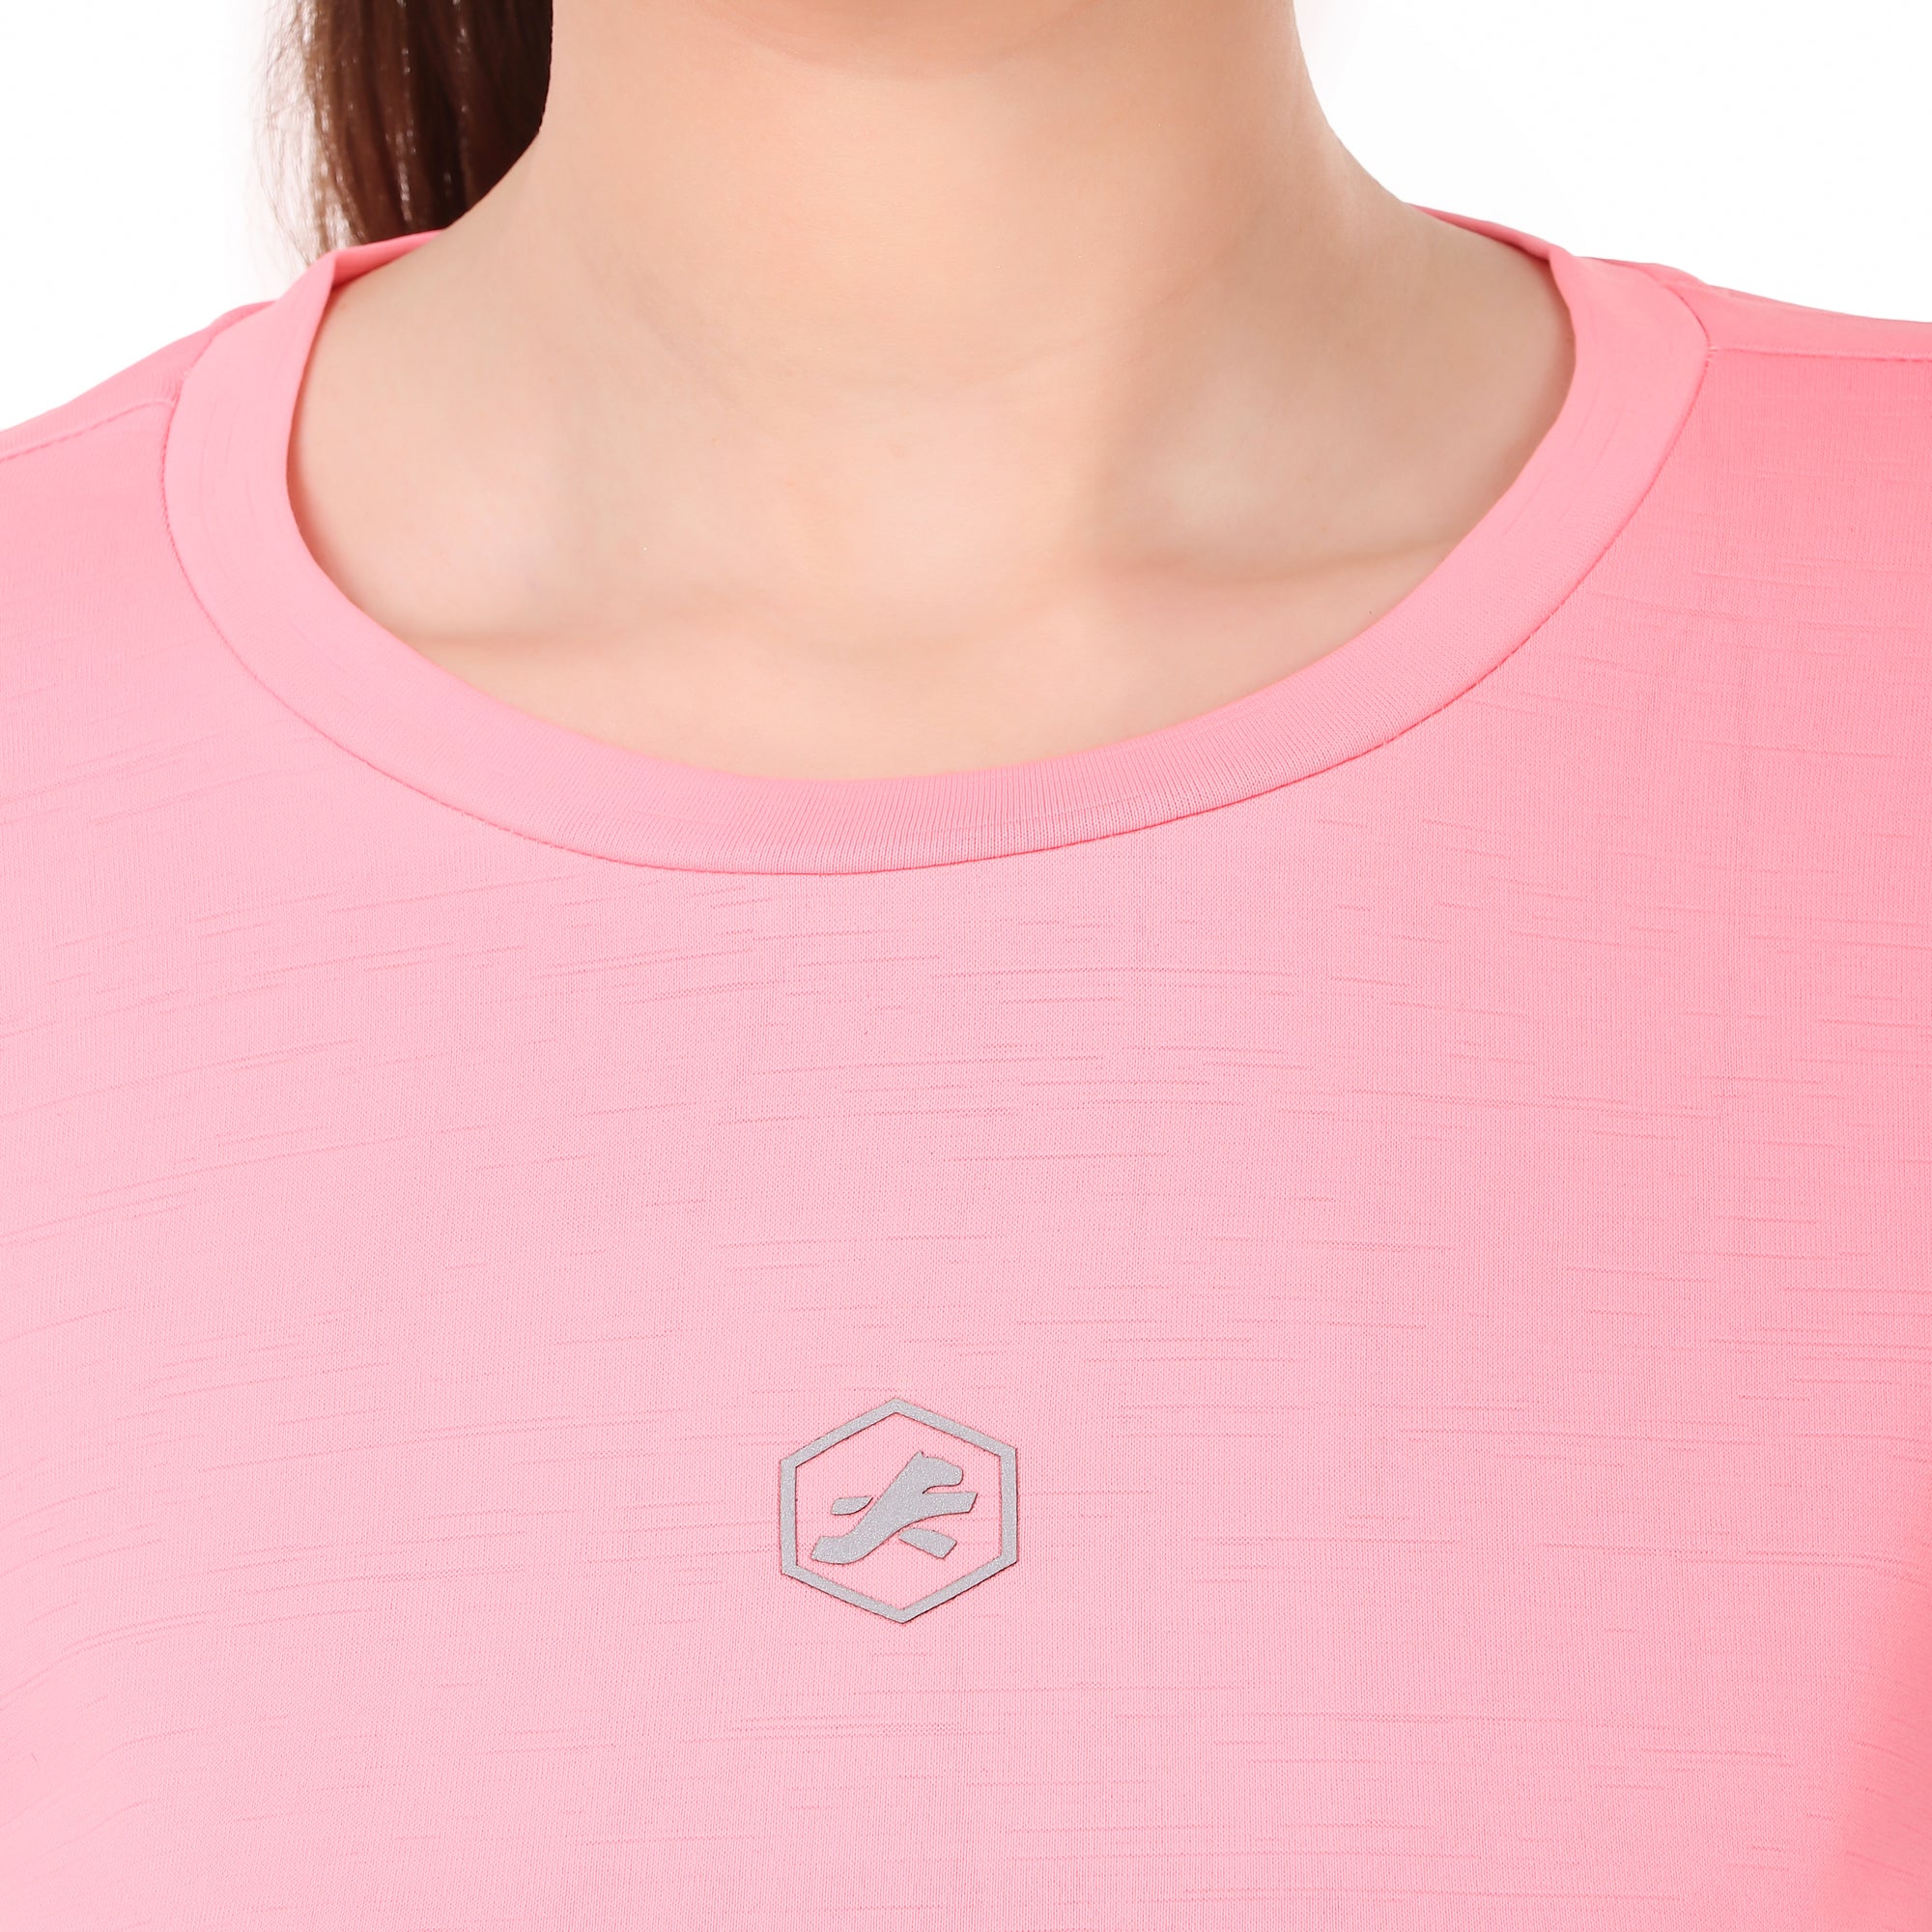 Performance Self Design Tshirt For Women FS (Pastel Pink)